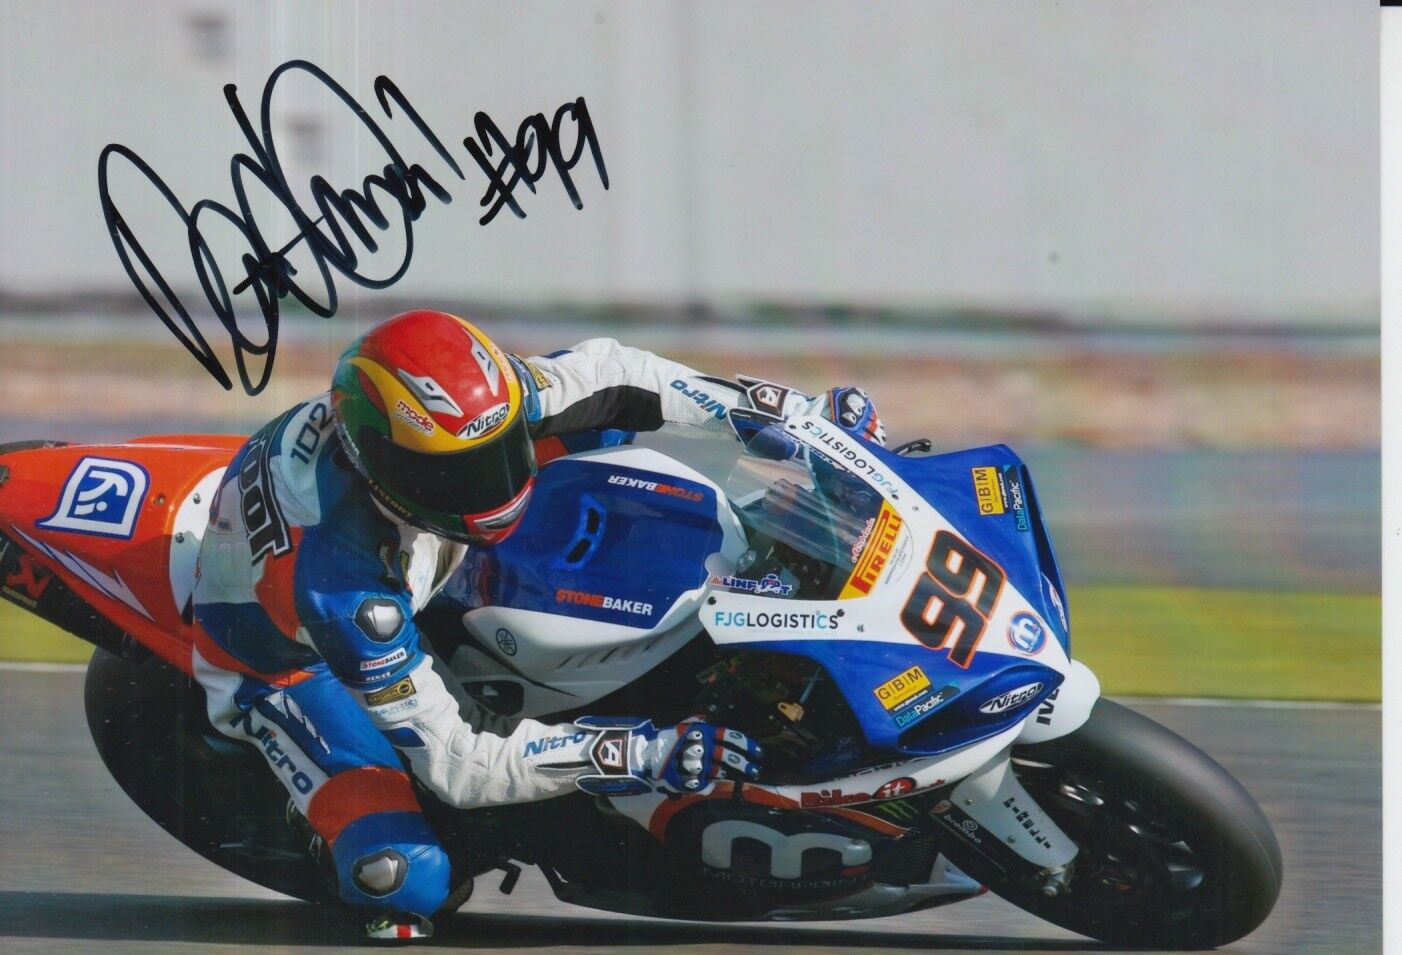 Dan Linfoot Hand Signed 7x5 Photo Poster painting BSB, MotoGP, WSBK 2.